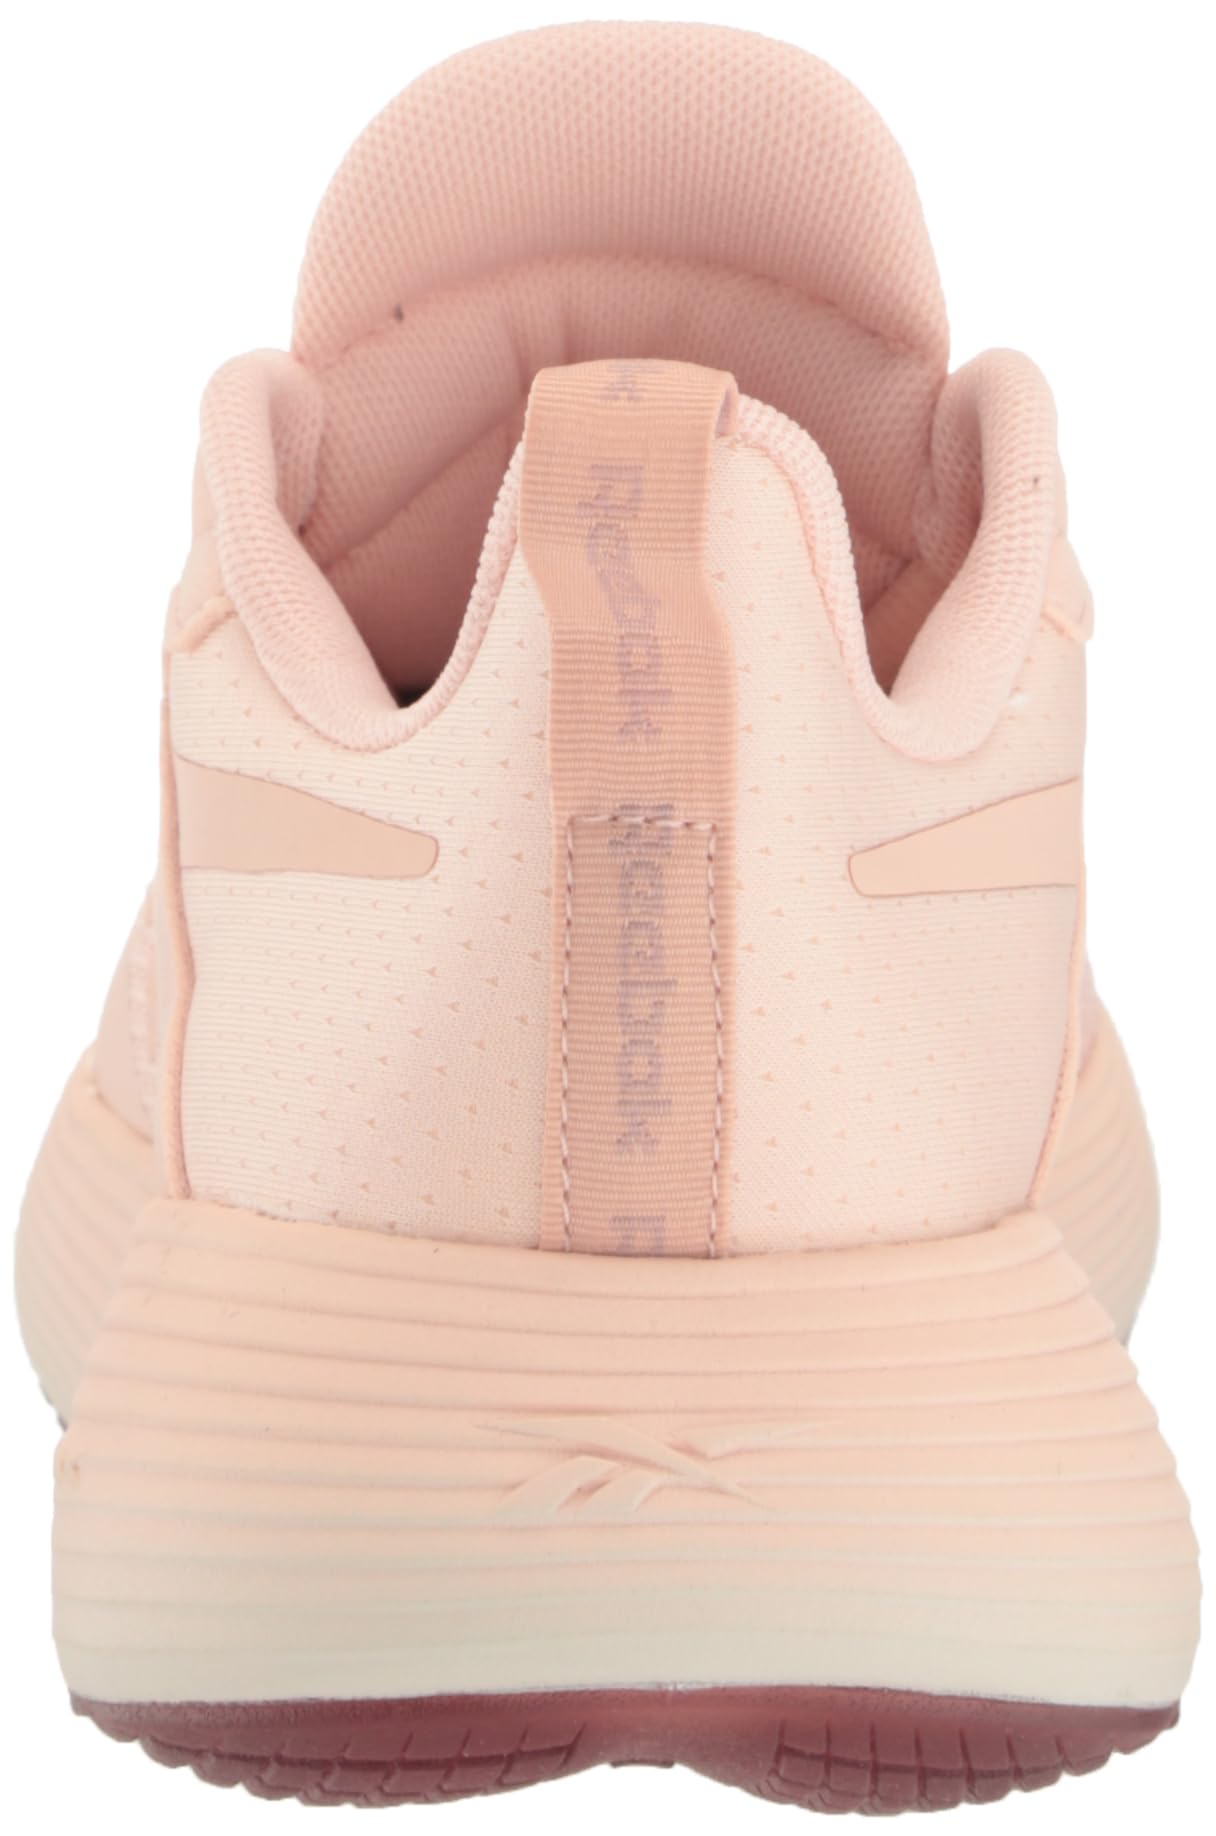 Reebok Women's DMX Comfort + Slip on Sneaker